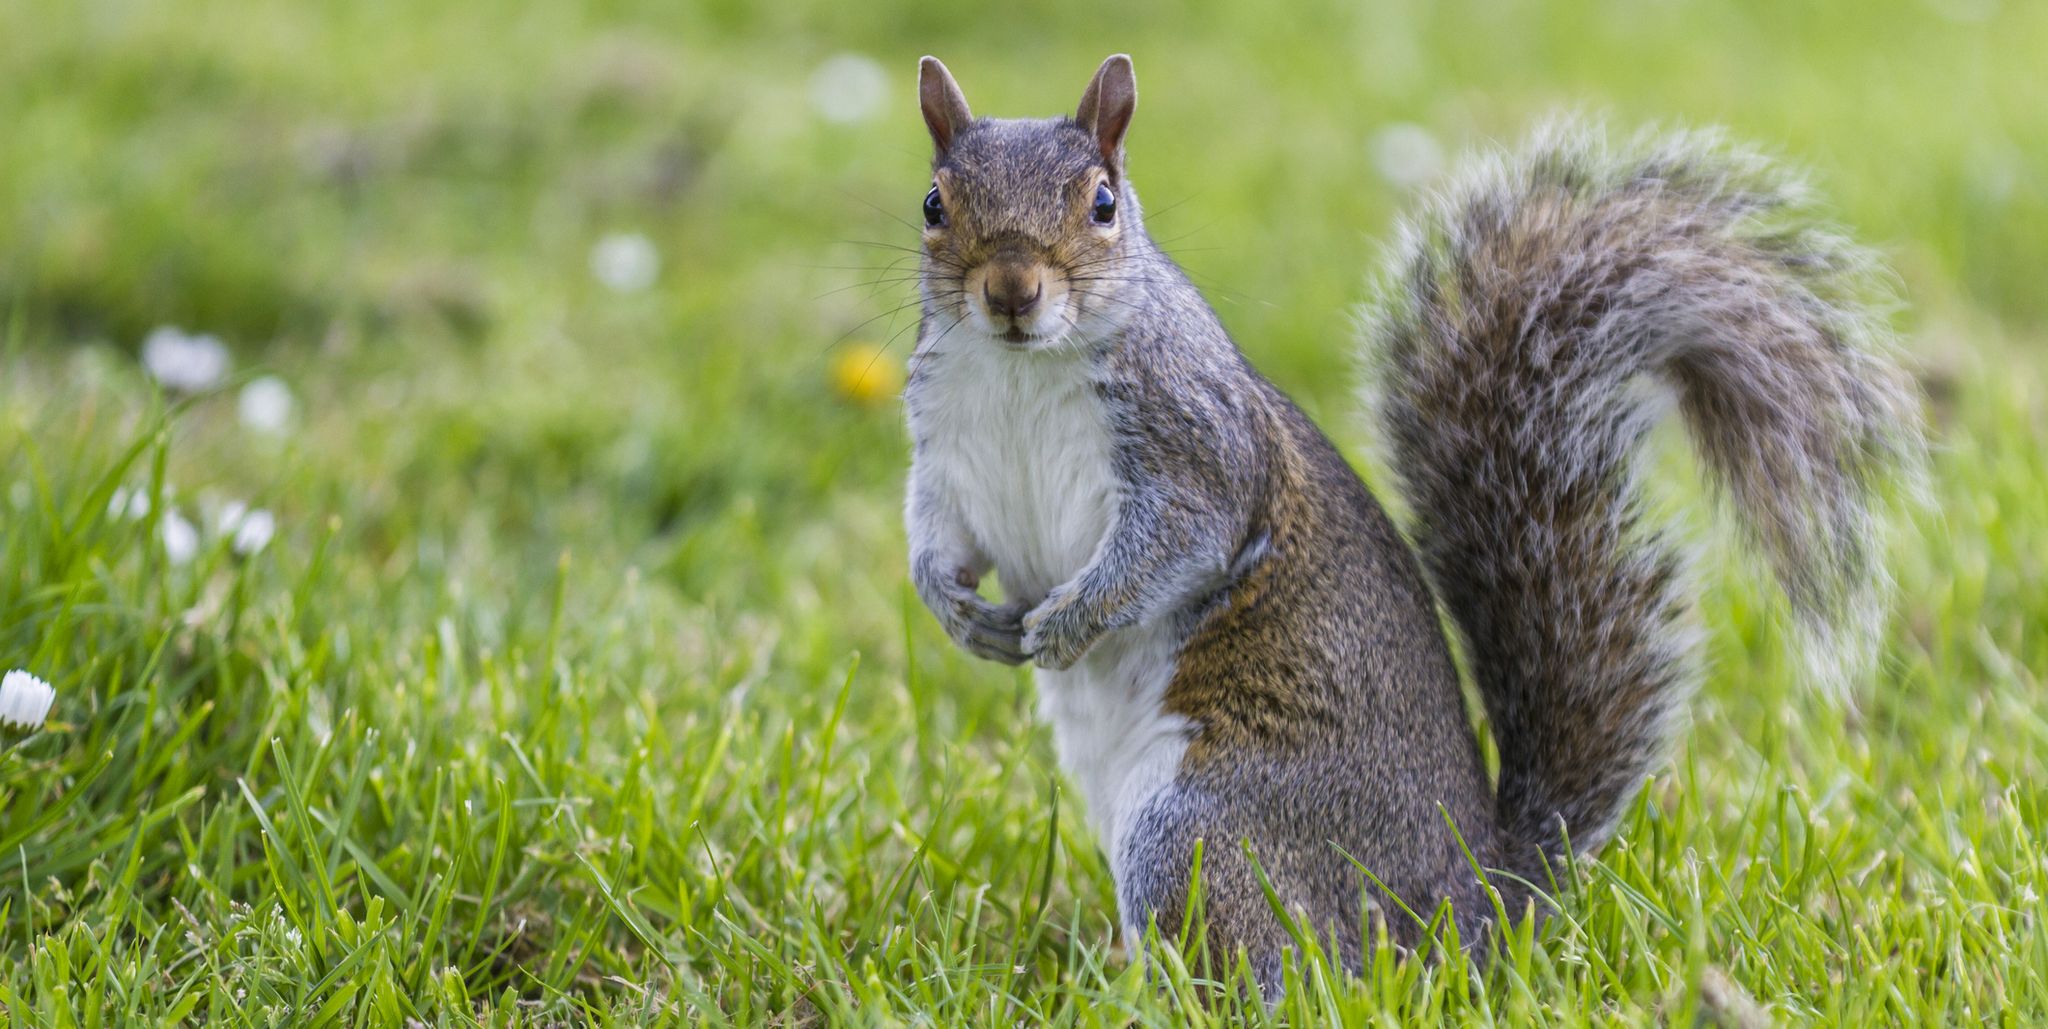 grey squirrel on grass